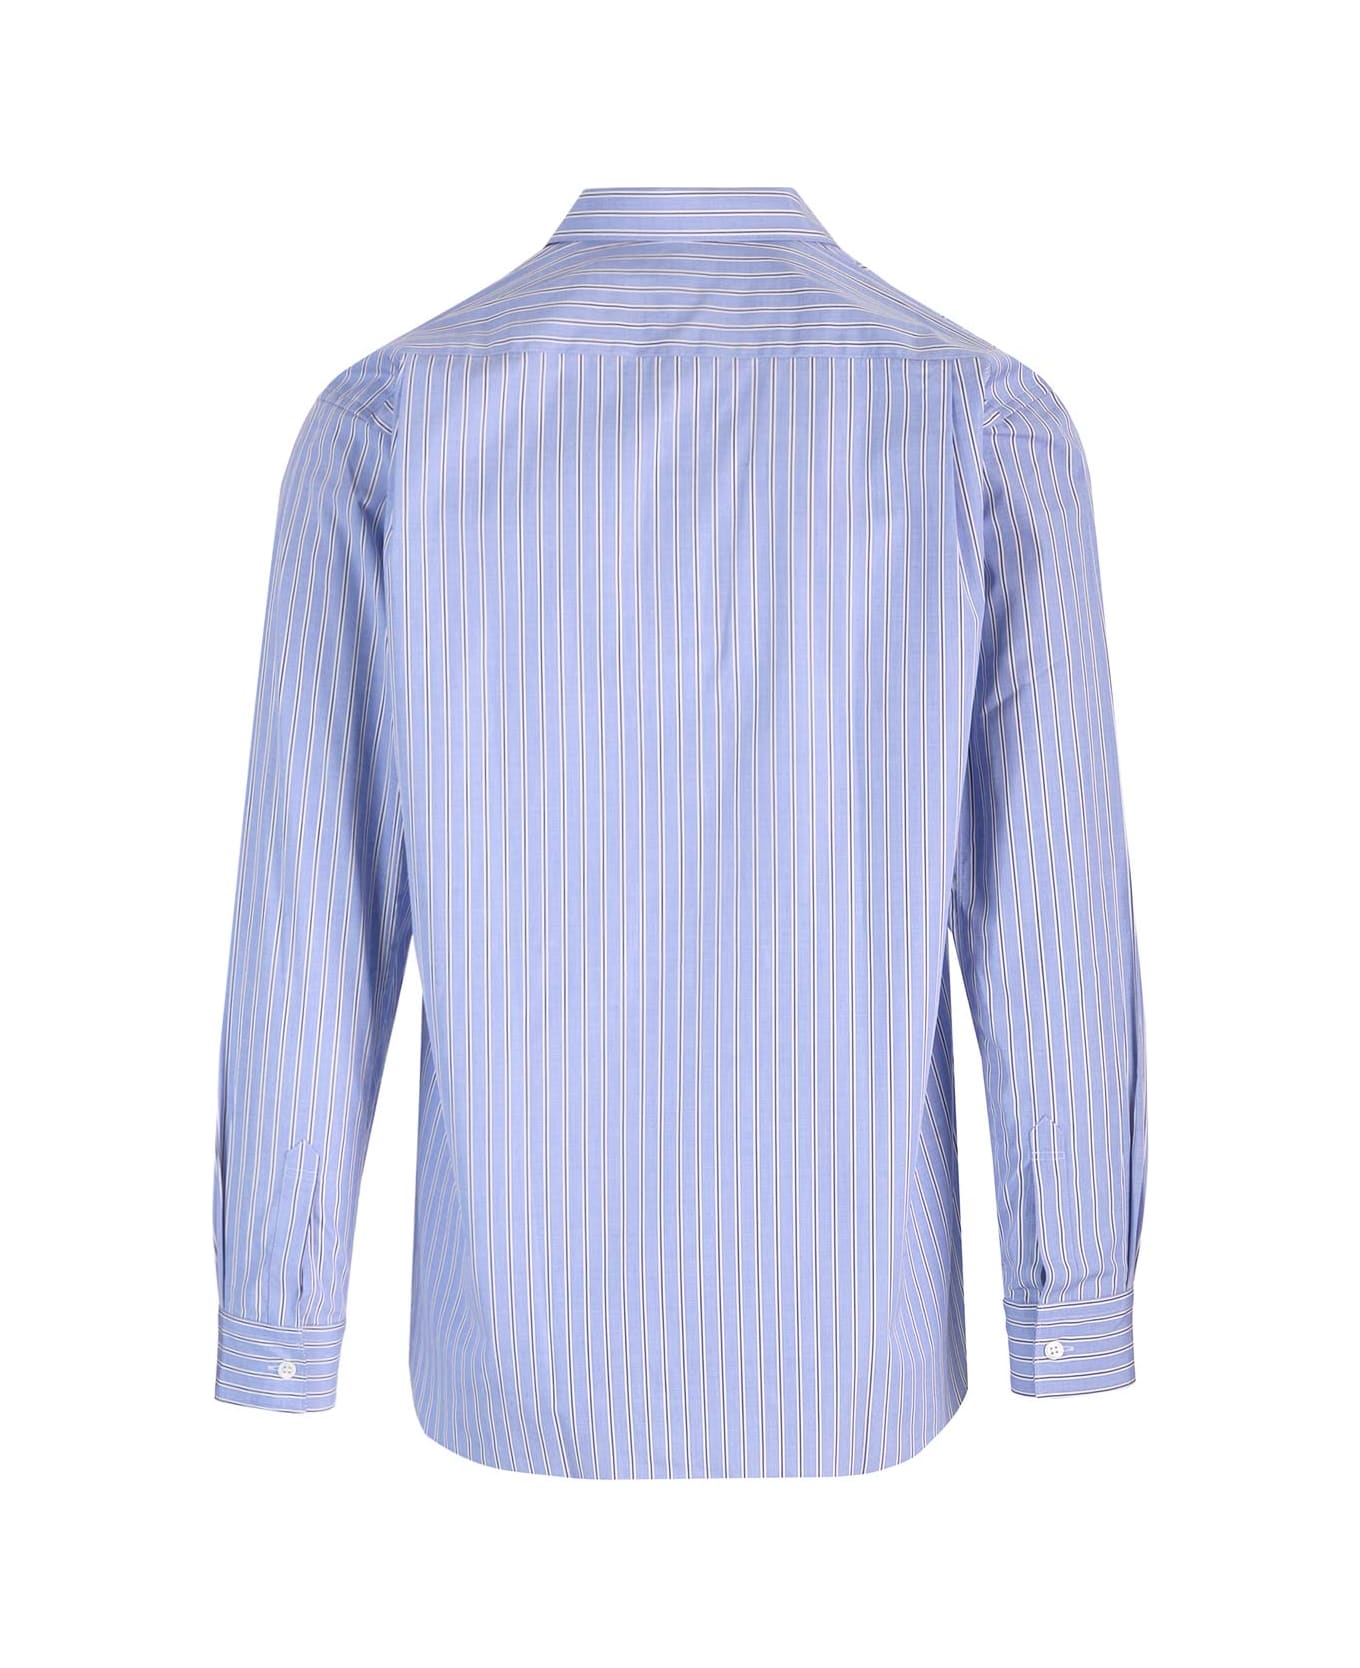 Comme des Garçons Shirt Striped Shirt With Pocket - MULTICOLOR シャツ